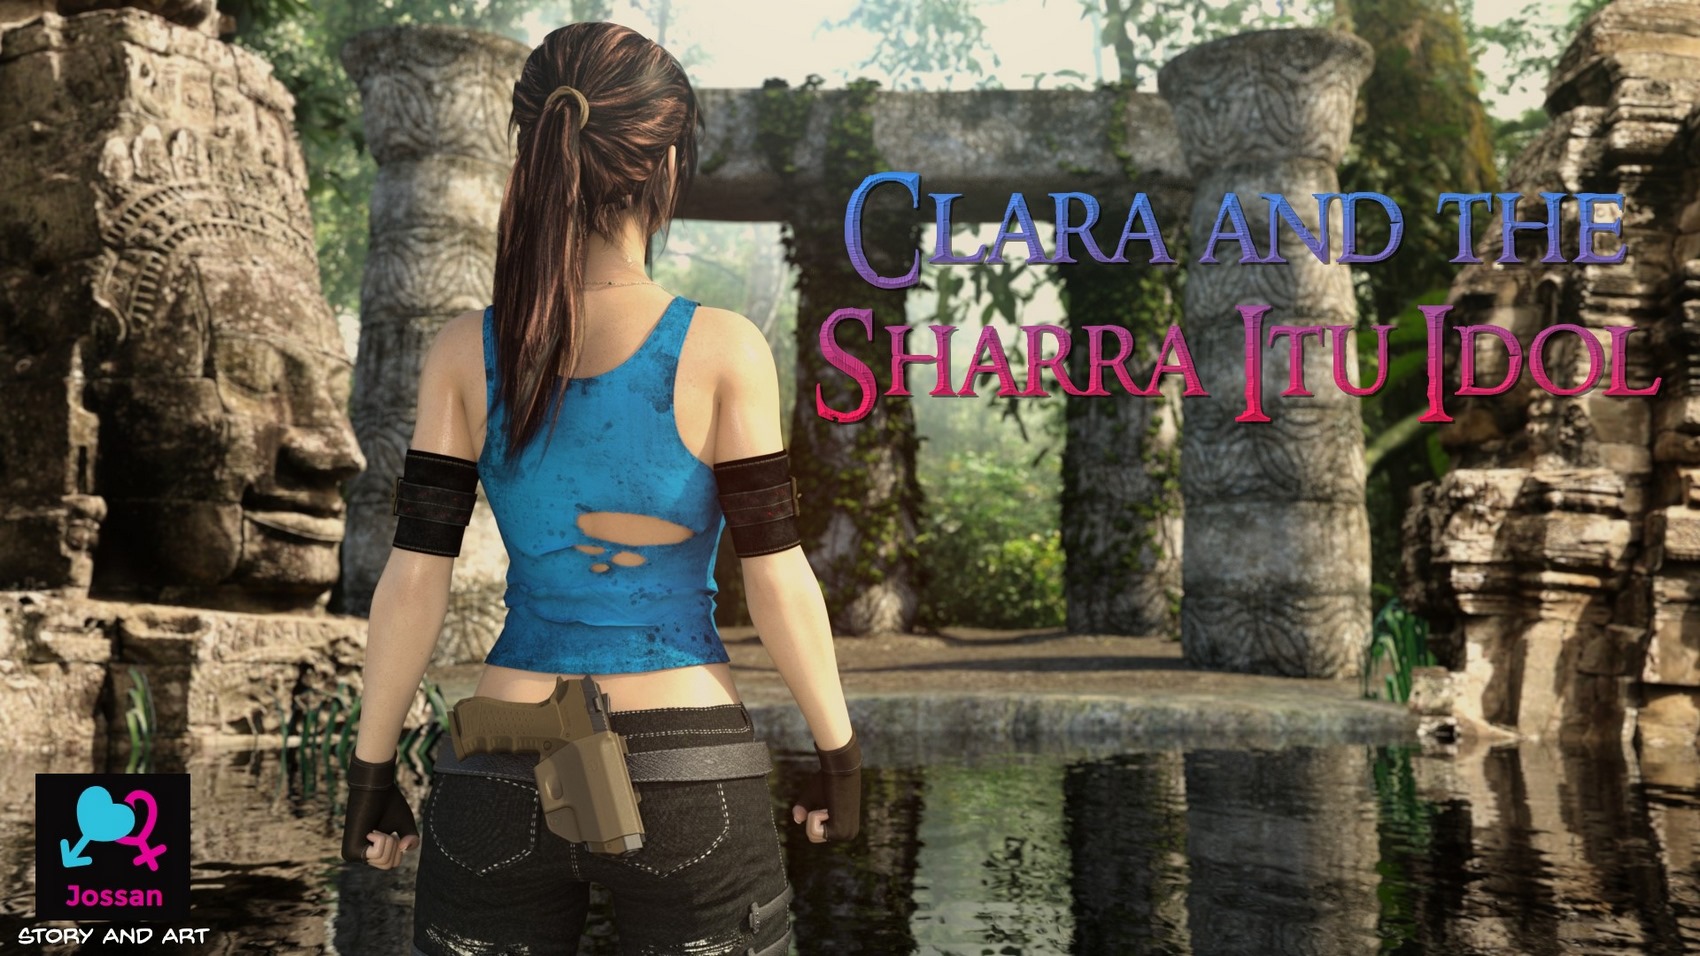 jossan – Clara and the Sharra Itu Idol